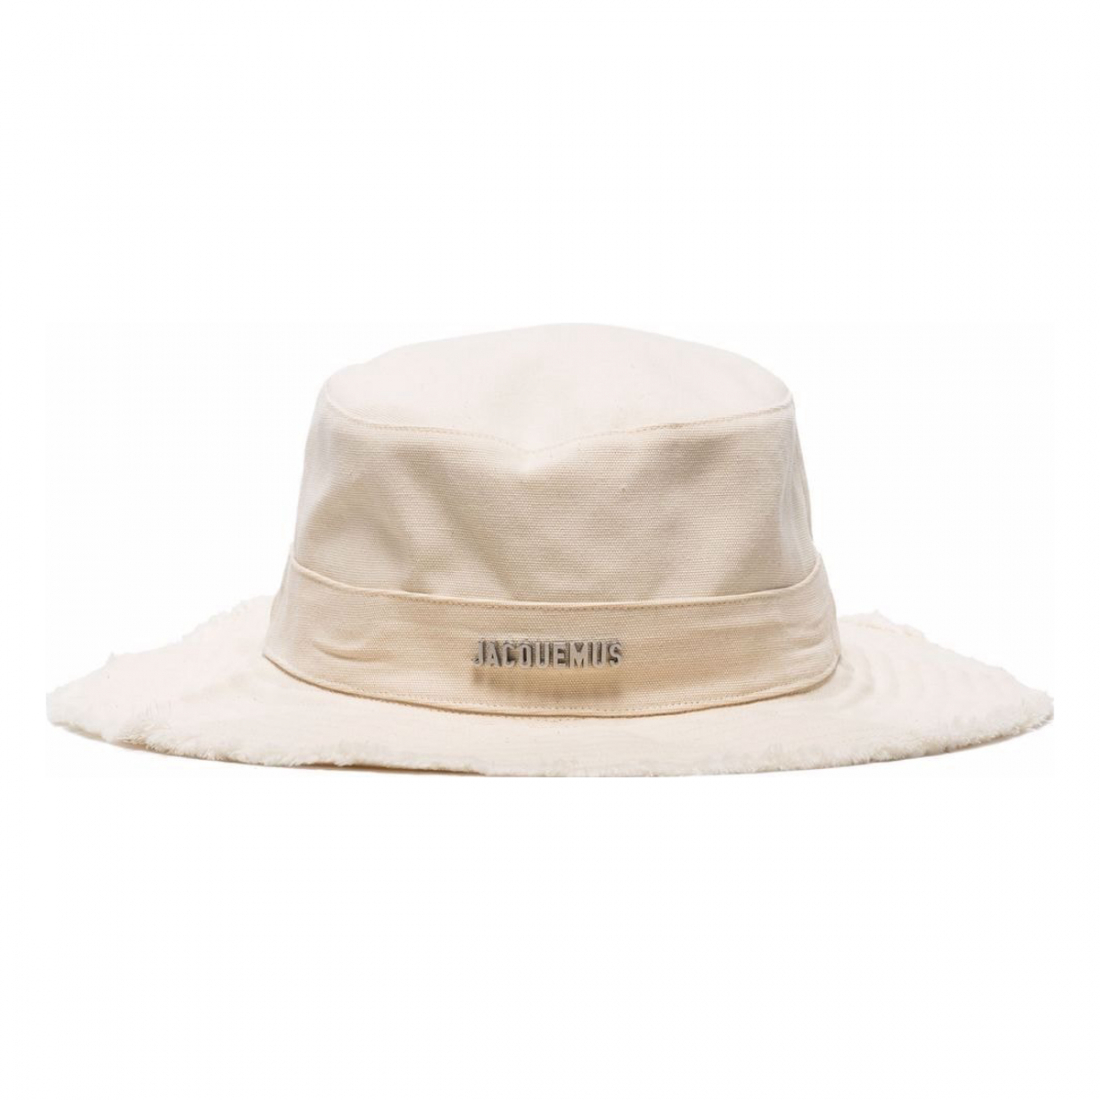 Women's 'Le Bob Artichaut' Bucket Hat